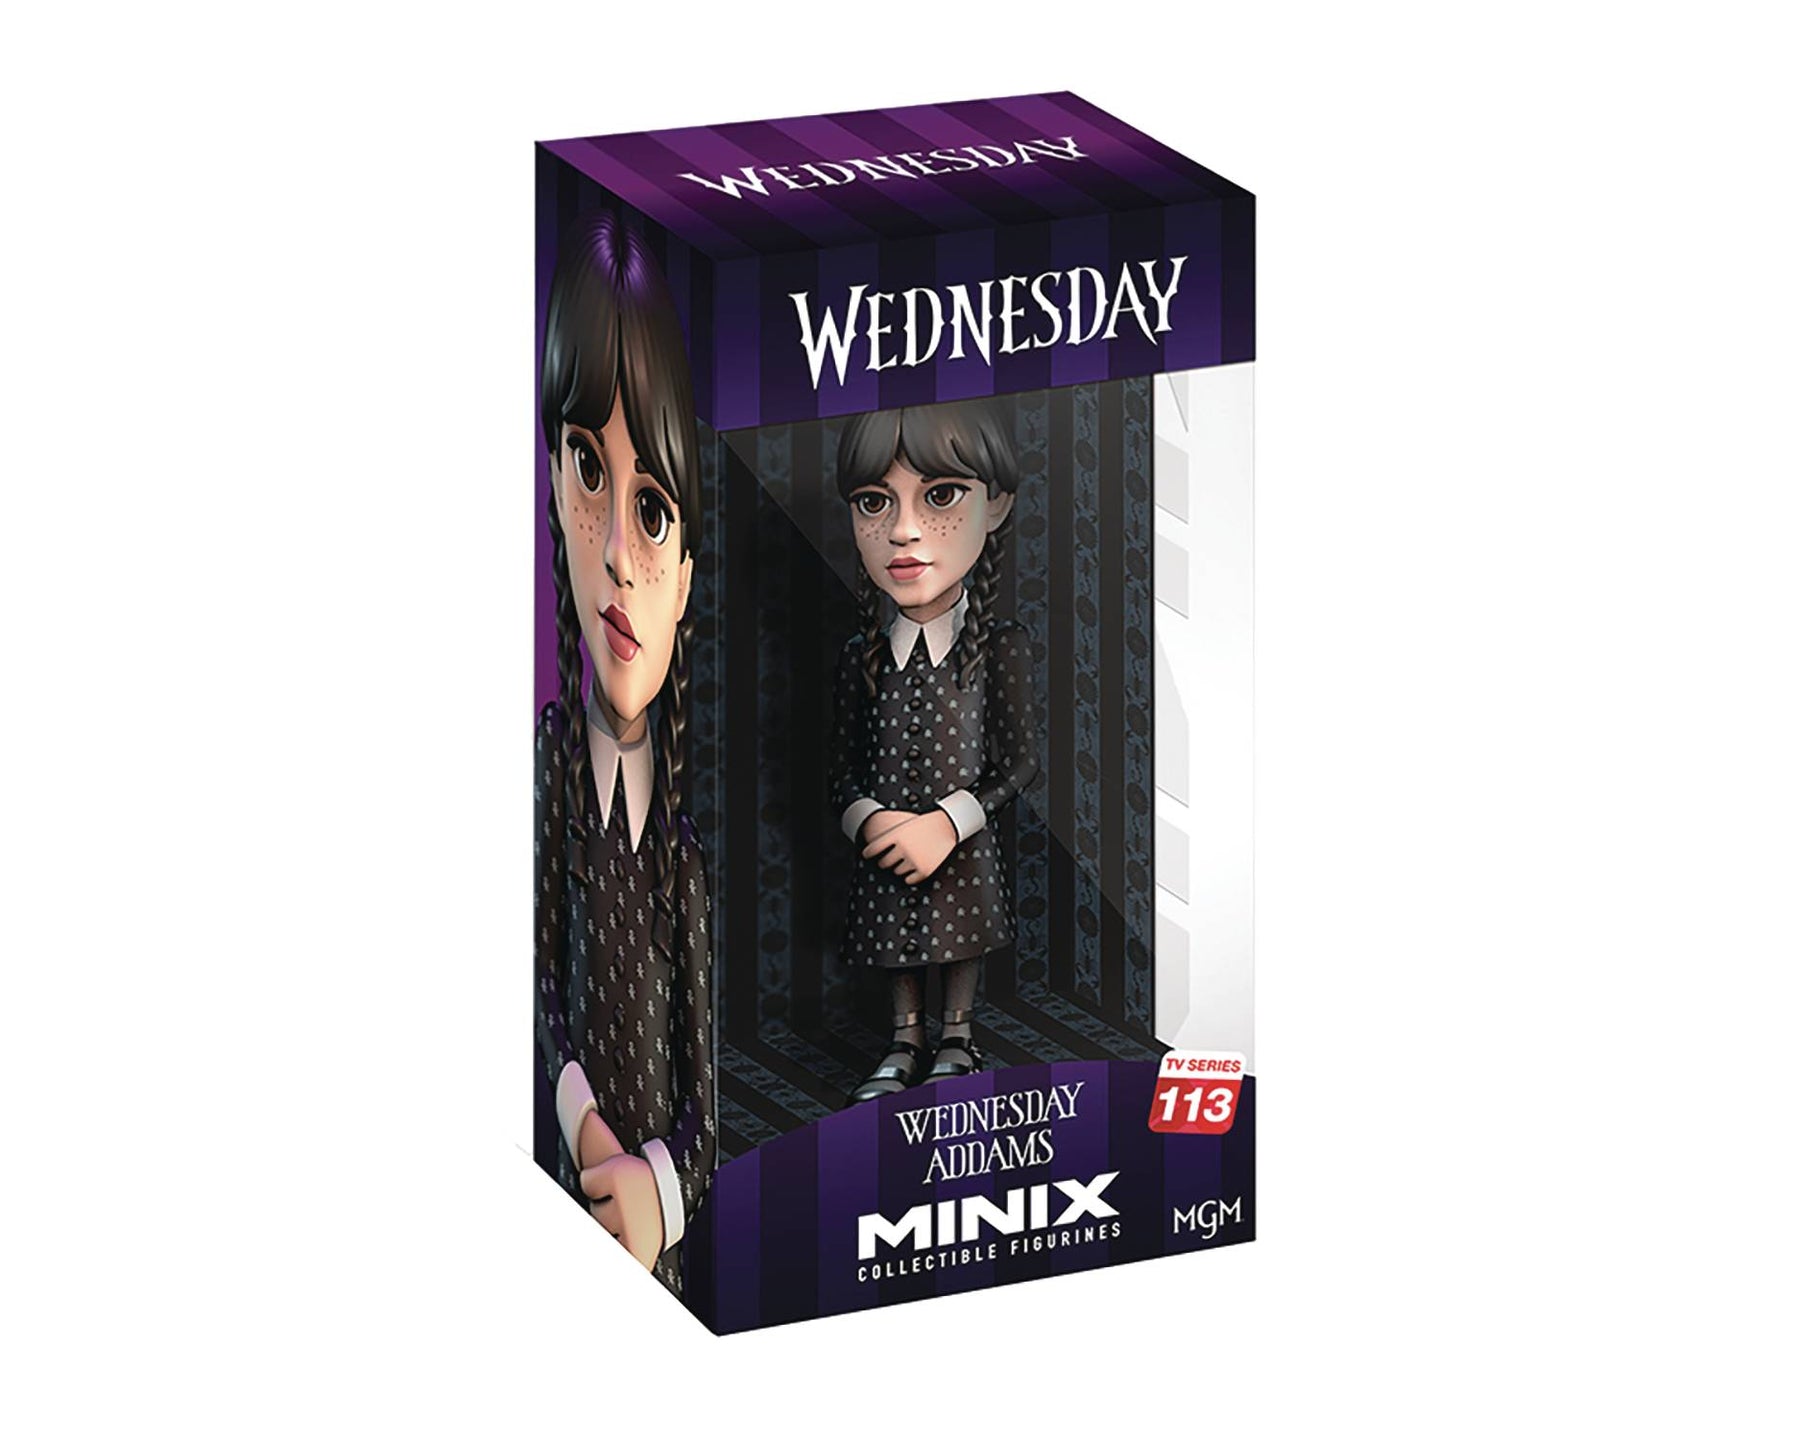 Mego - MINIX Wednesday: Wednesday Addams Vinyl Figure